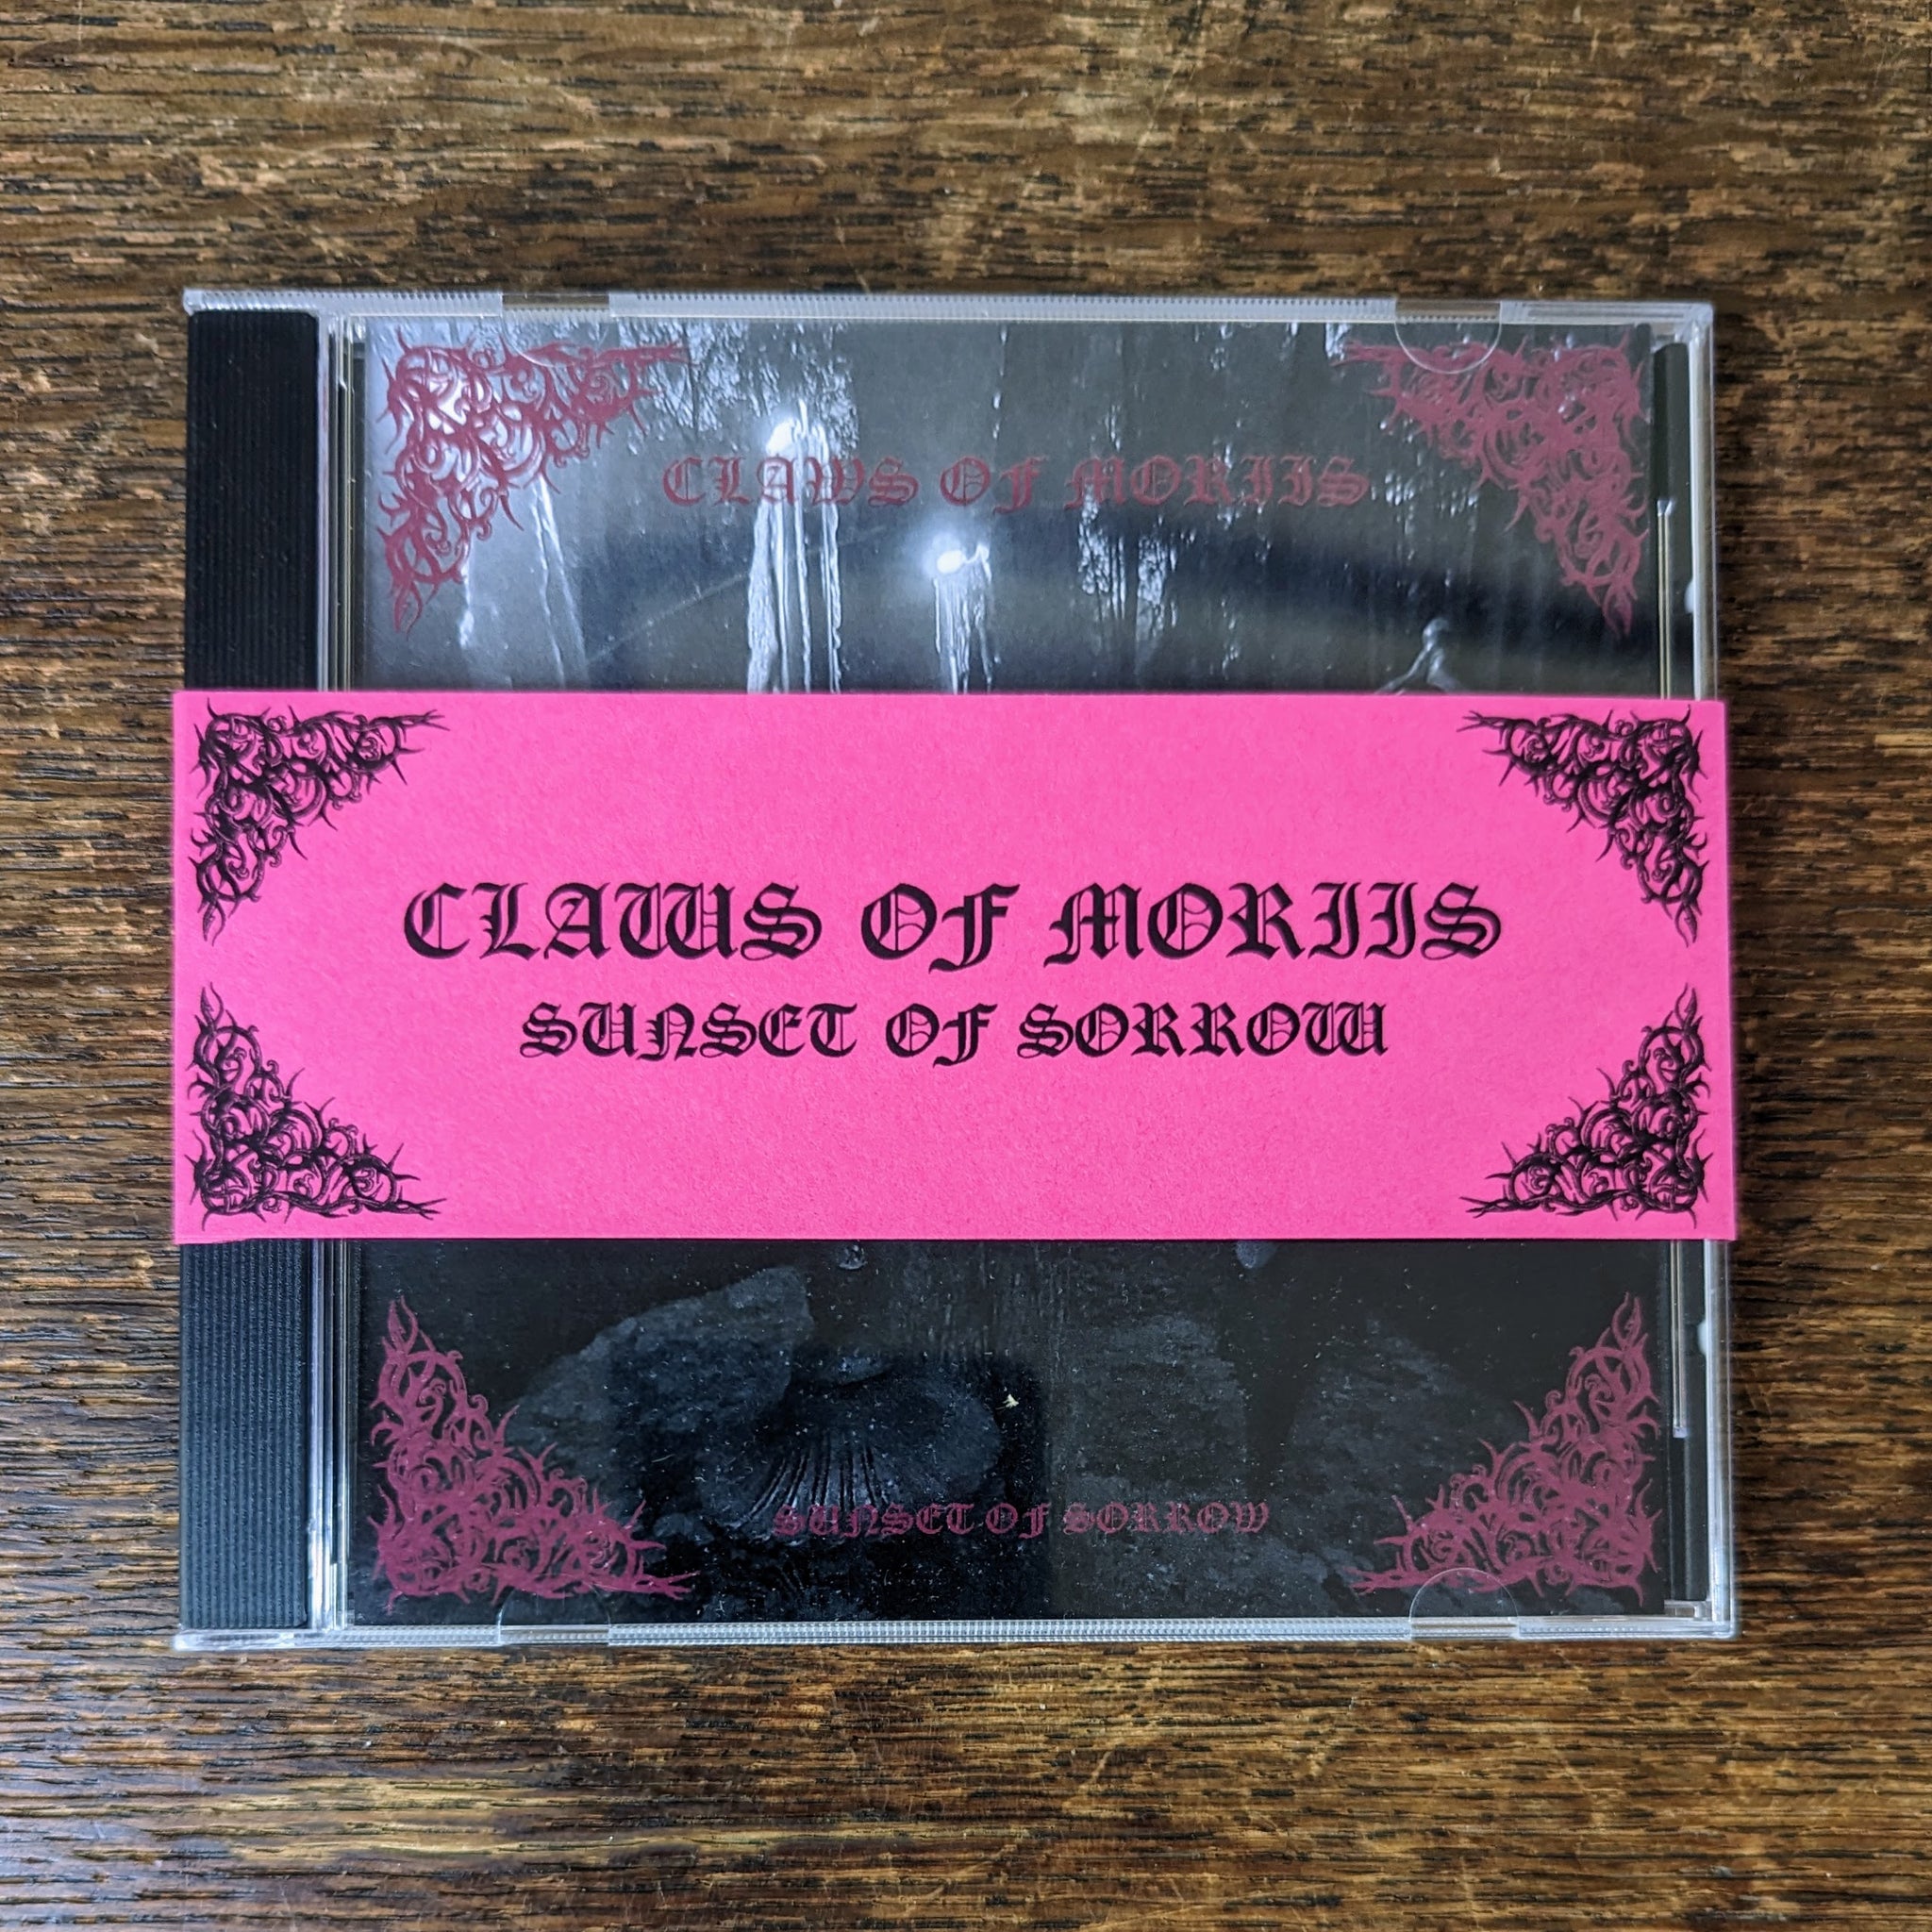 CLAWS OF MORIIS "Sunset of Sorrow" CD [w/ OBI, lim.50]